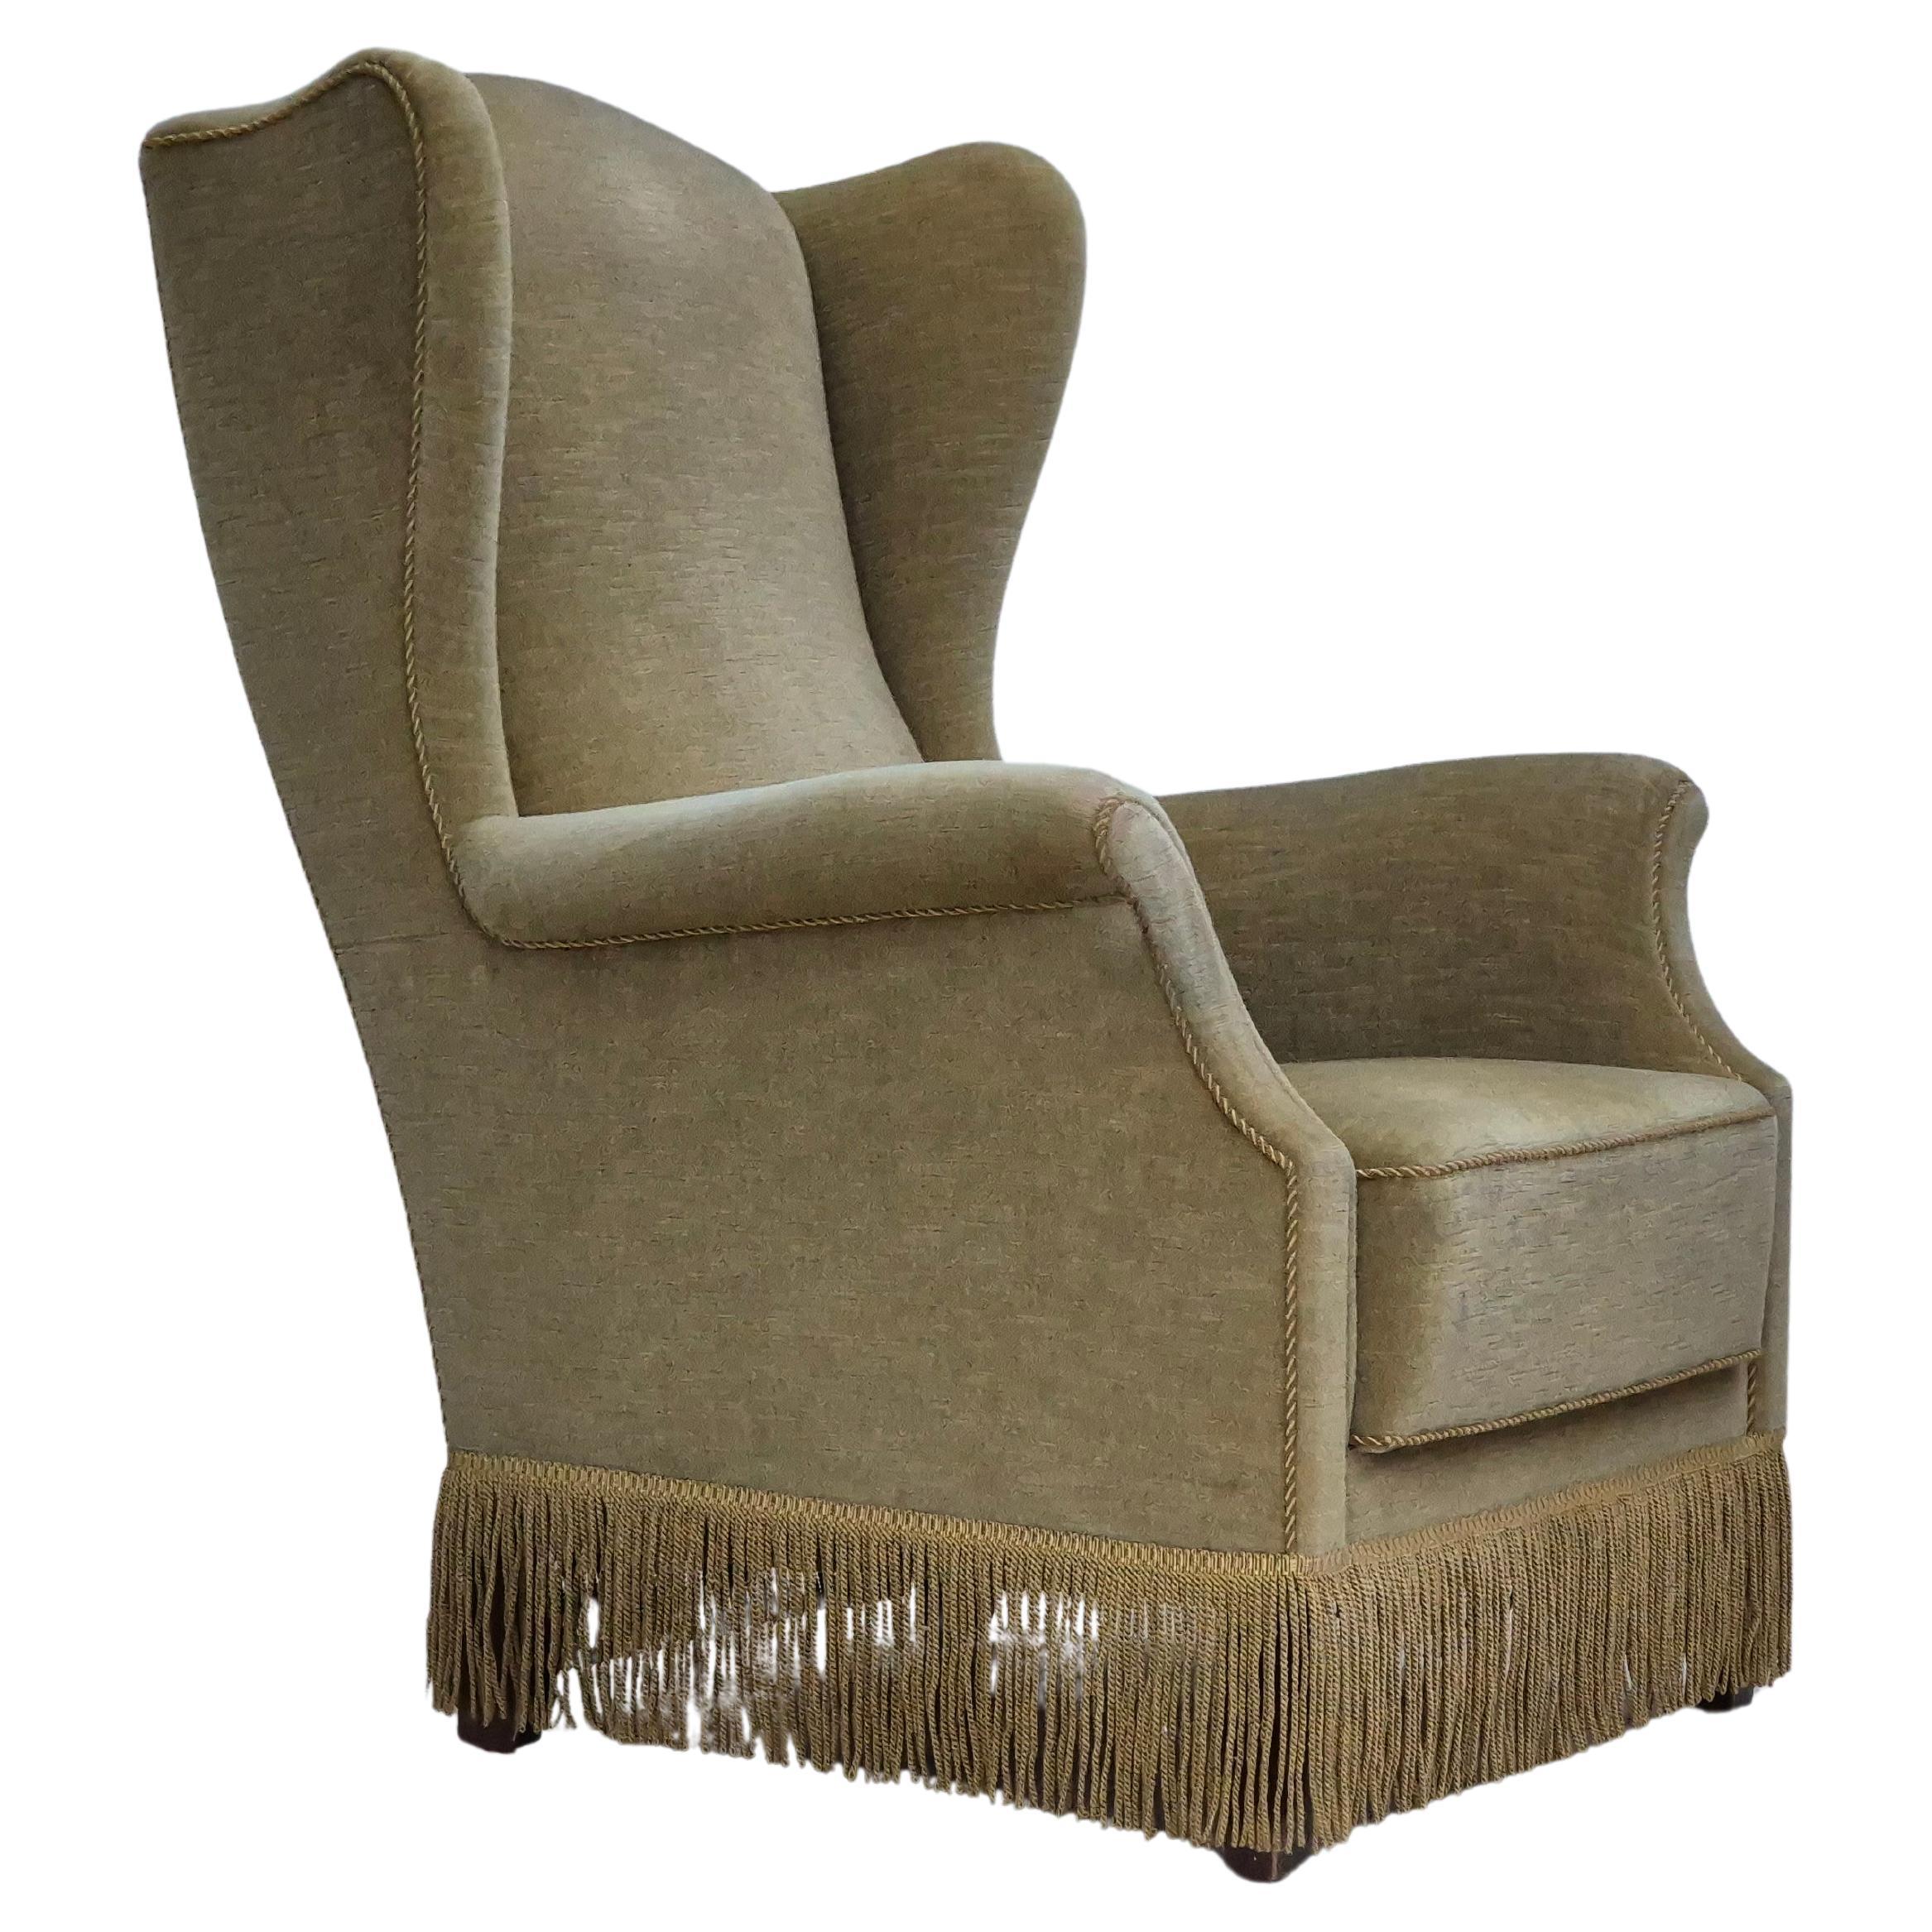 1970s, Danish design, wingback armchair, original condition, furniture velour. For Sale